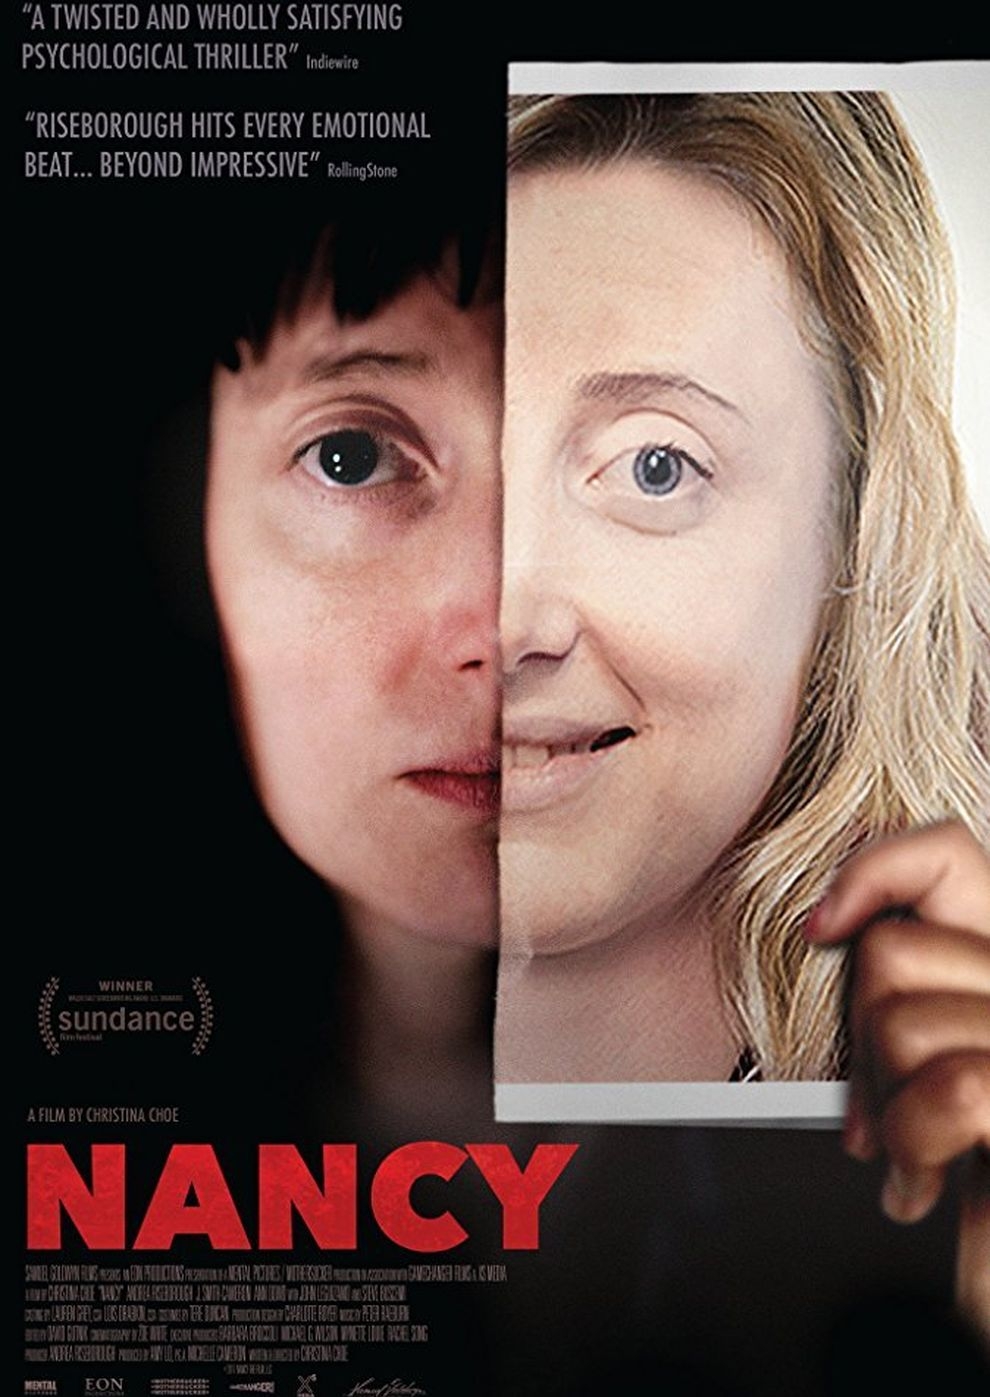 Nancy (Poster)